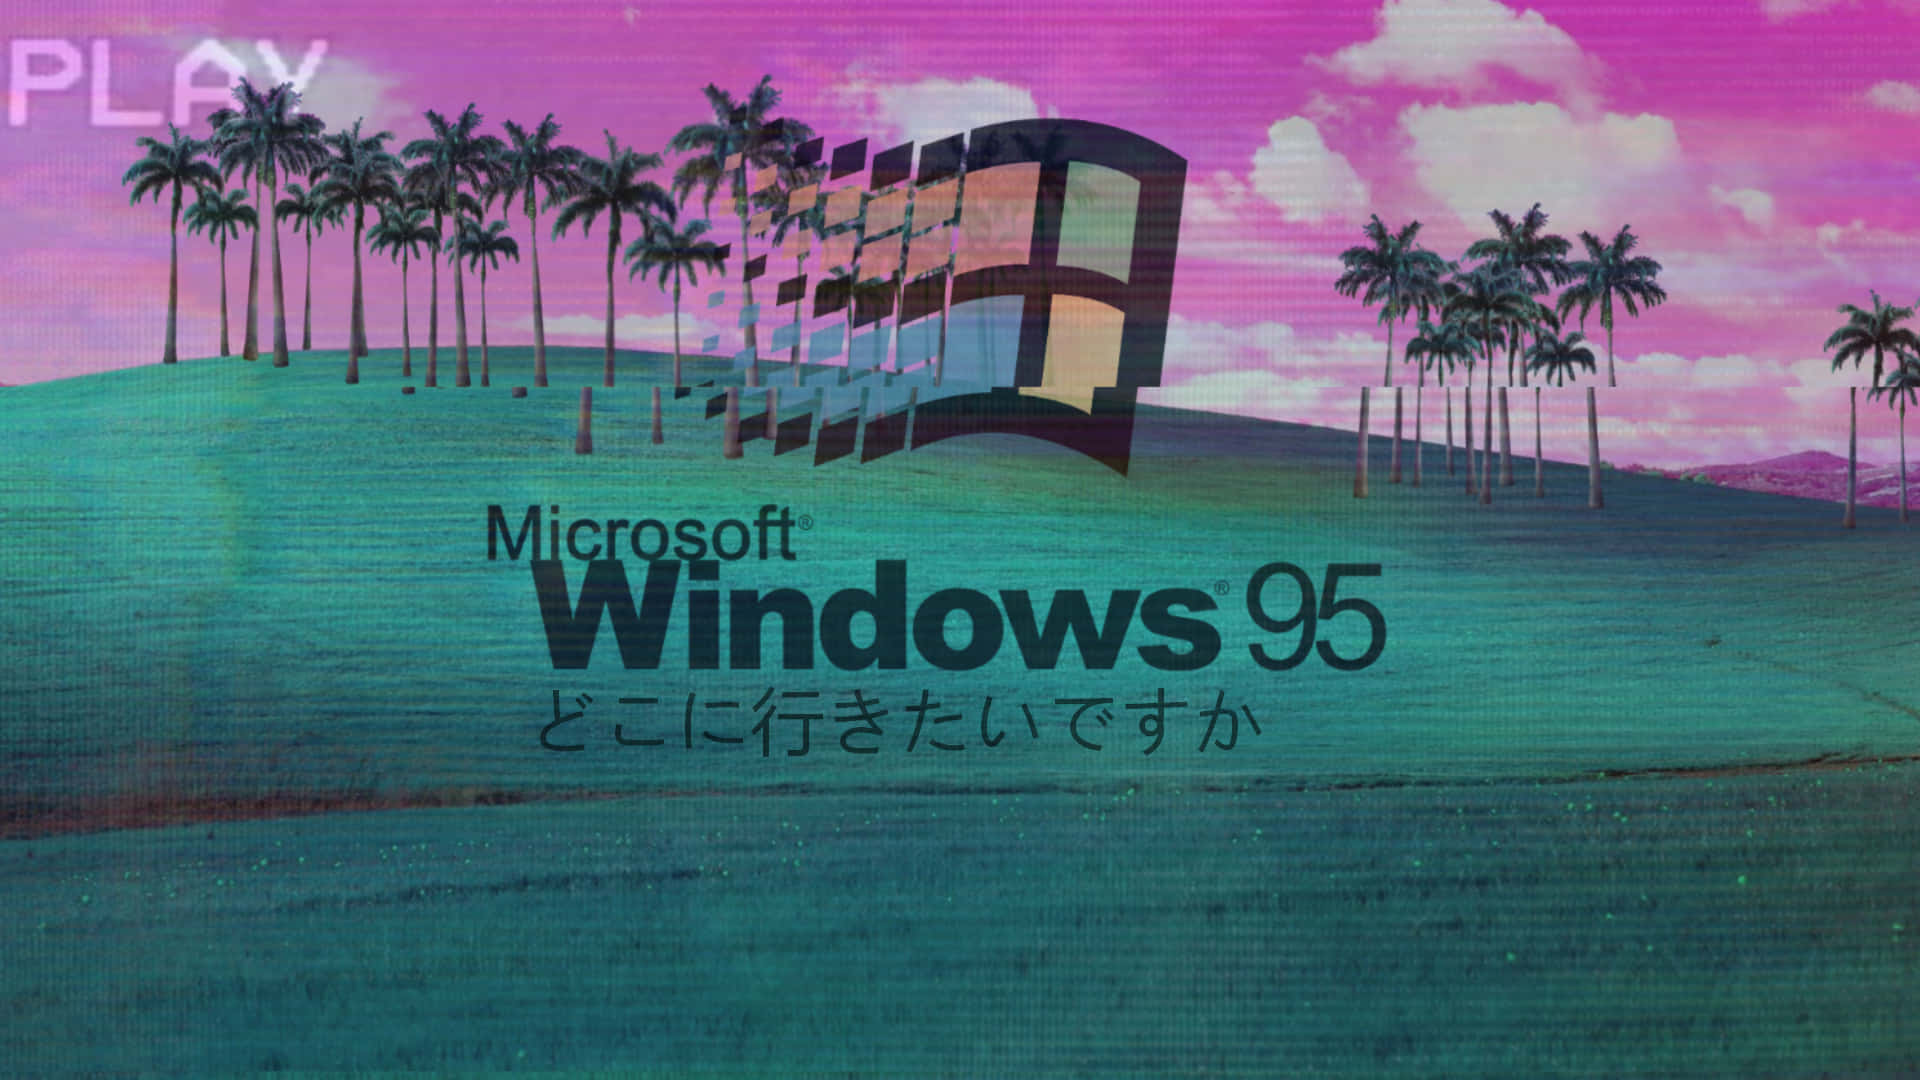 Vintage Aesthetic Background Of Windows 95